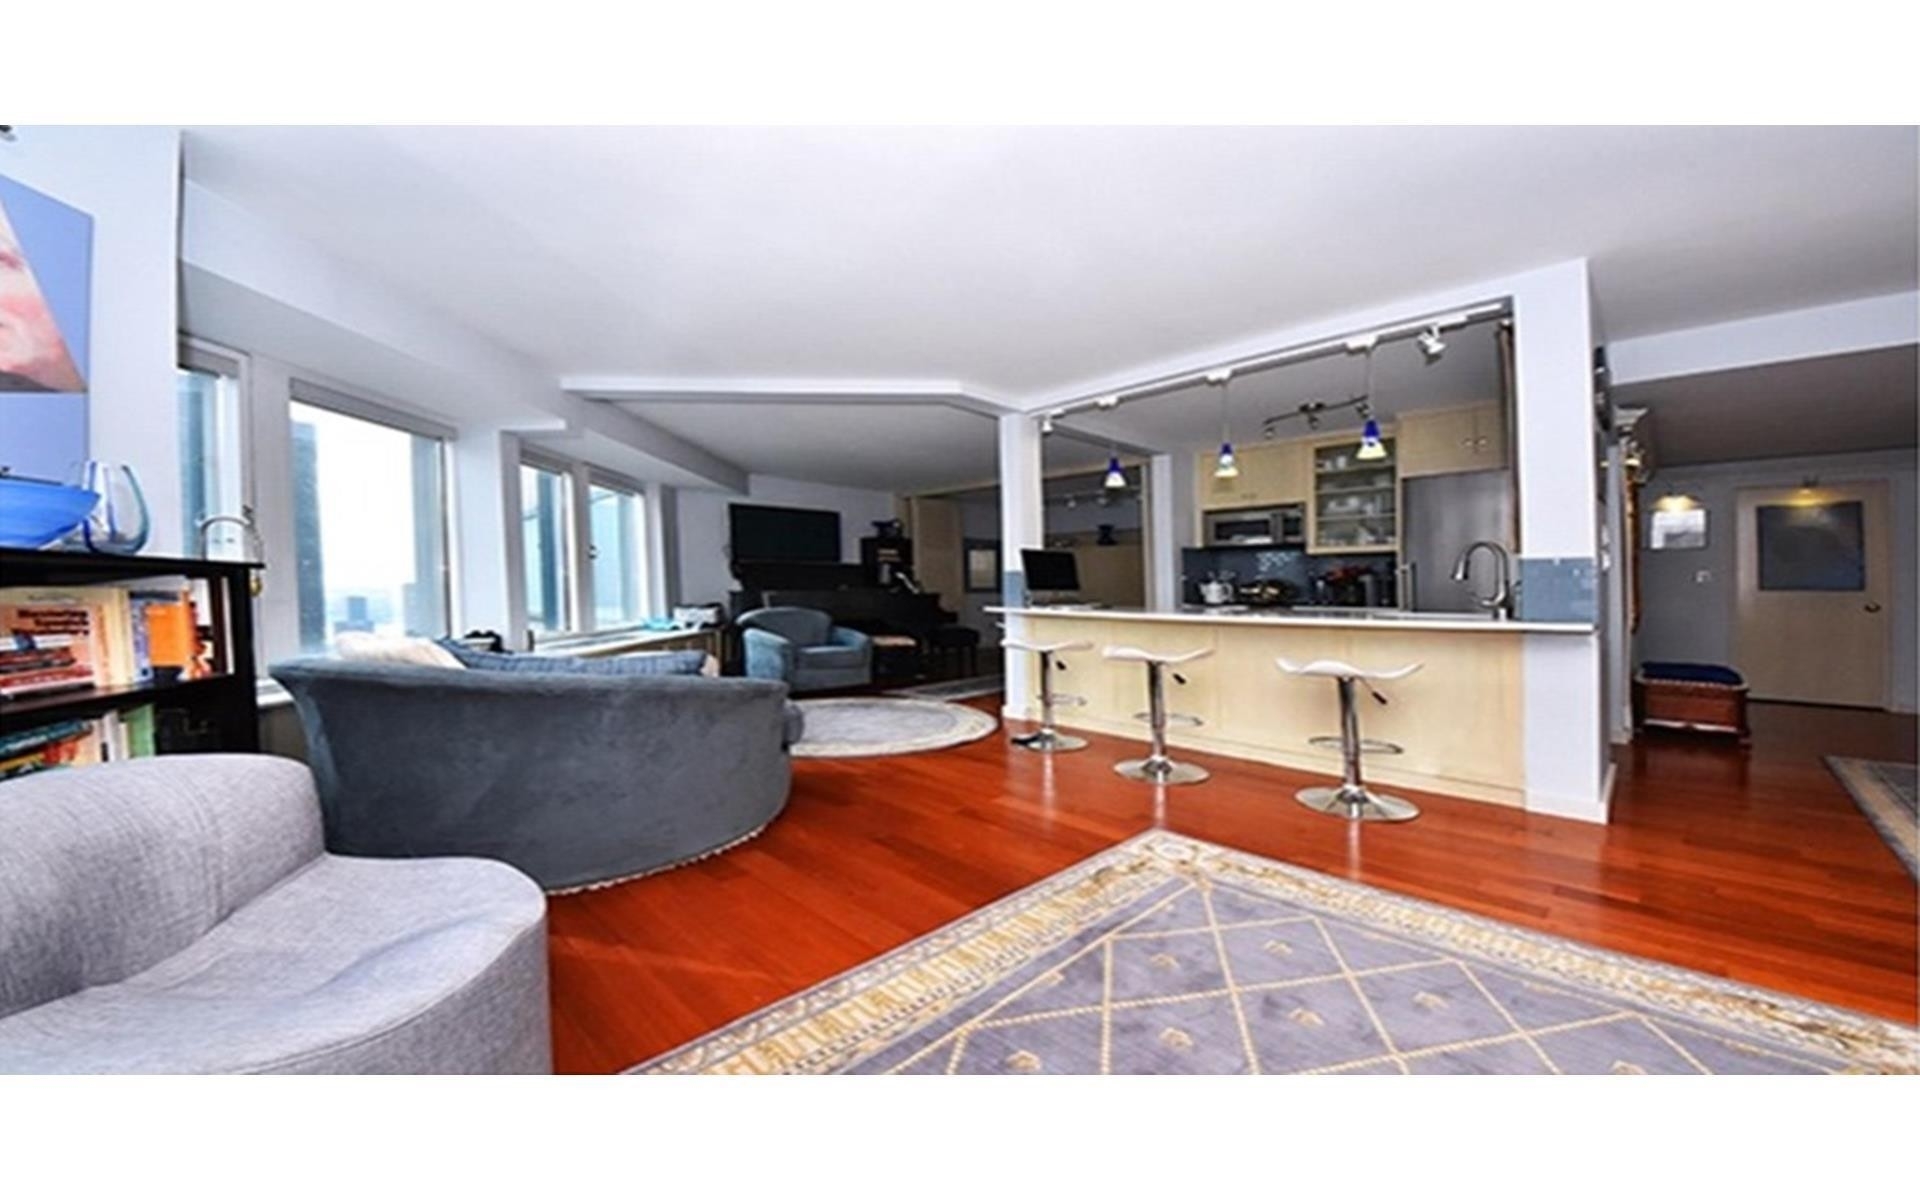 Condominium for Sale at Cityspire, 150 W 56TH ST, 4410 Midtown West, New York, NY 10019